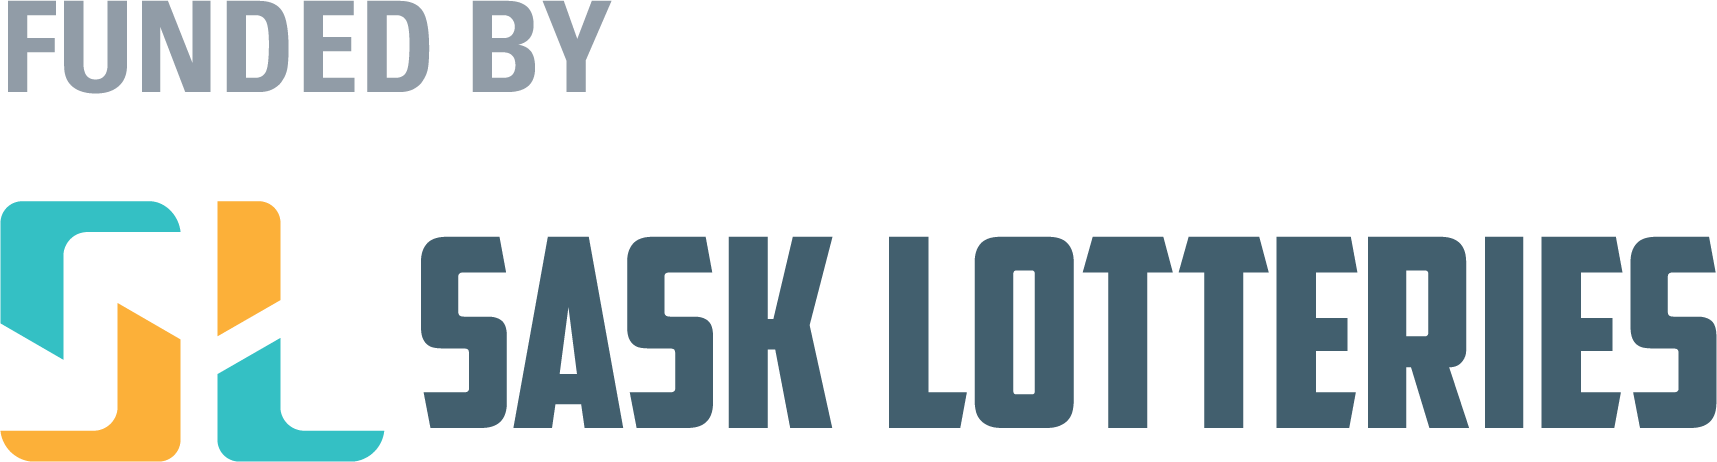 sk-lotteries-cmyk-logo